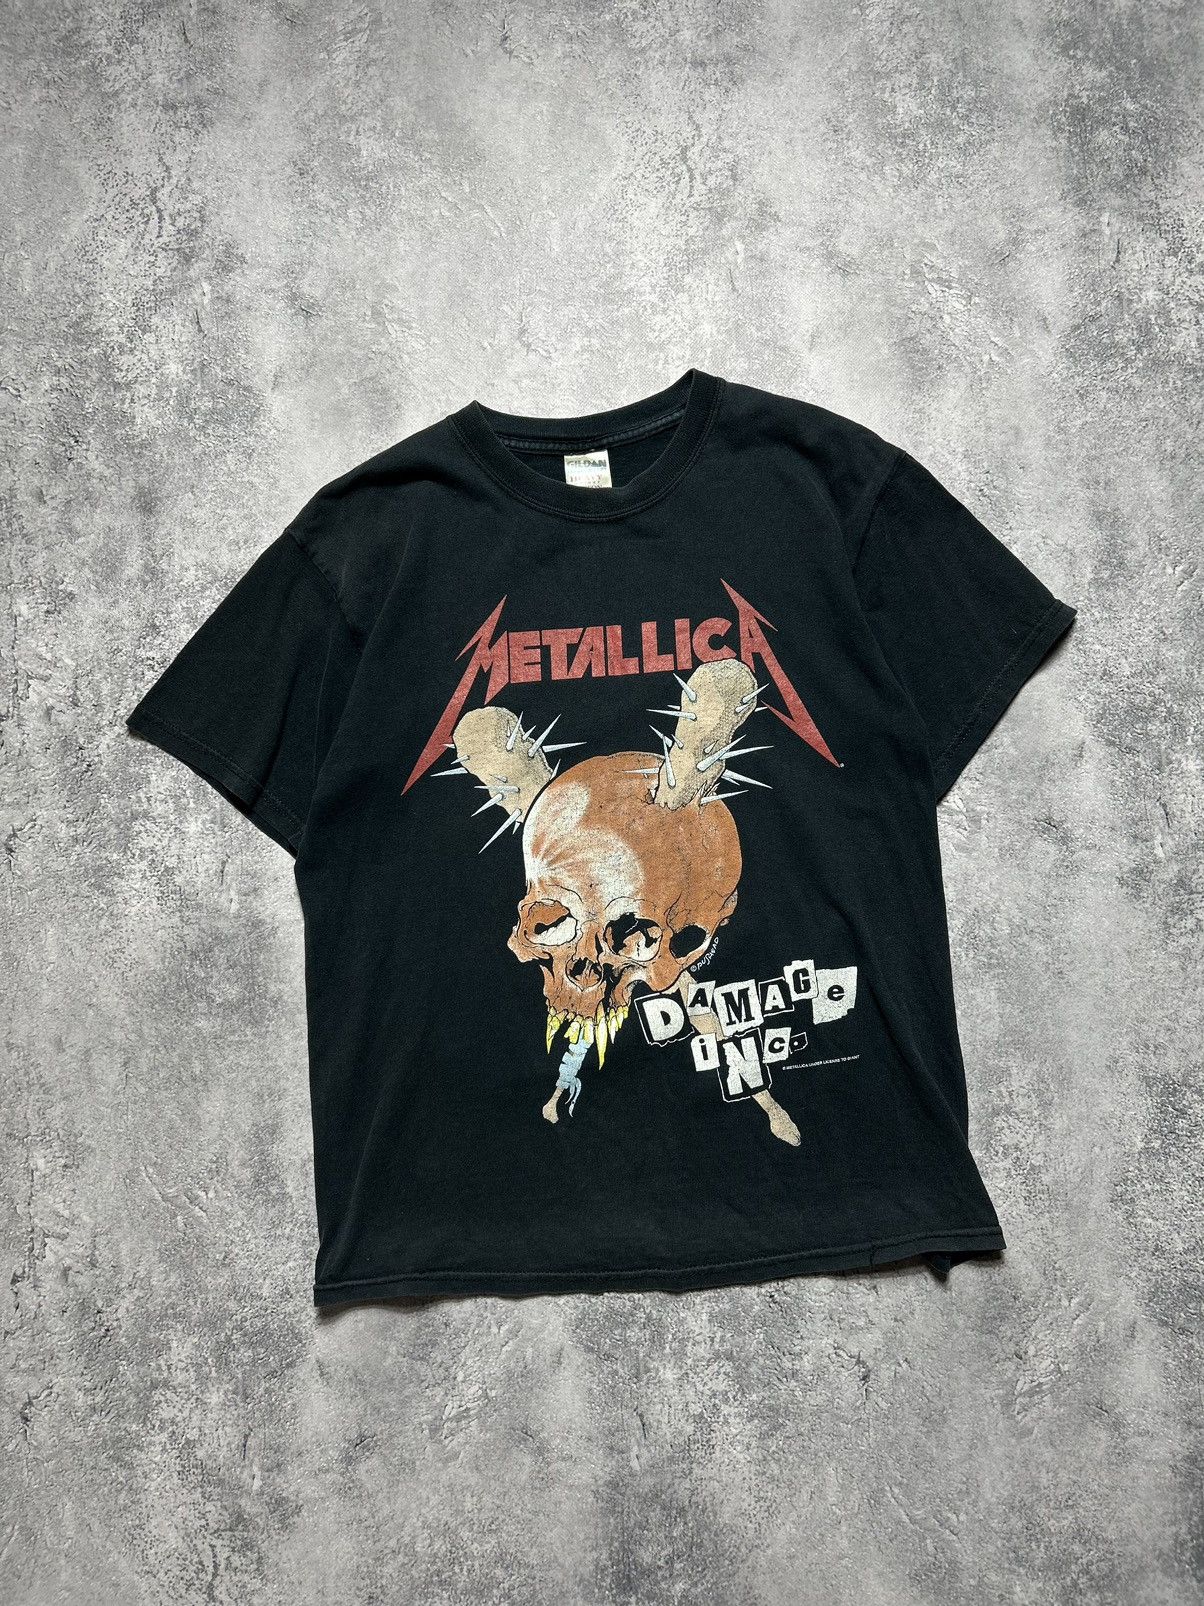 Pre-owned Band Tees X Metallica Vintage Metallica T-shirt 90's Damage Inc Tour Big Logo In Black